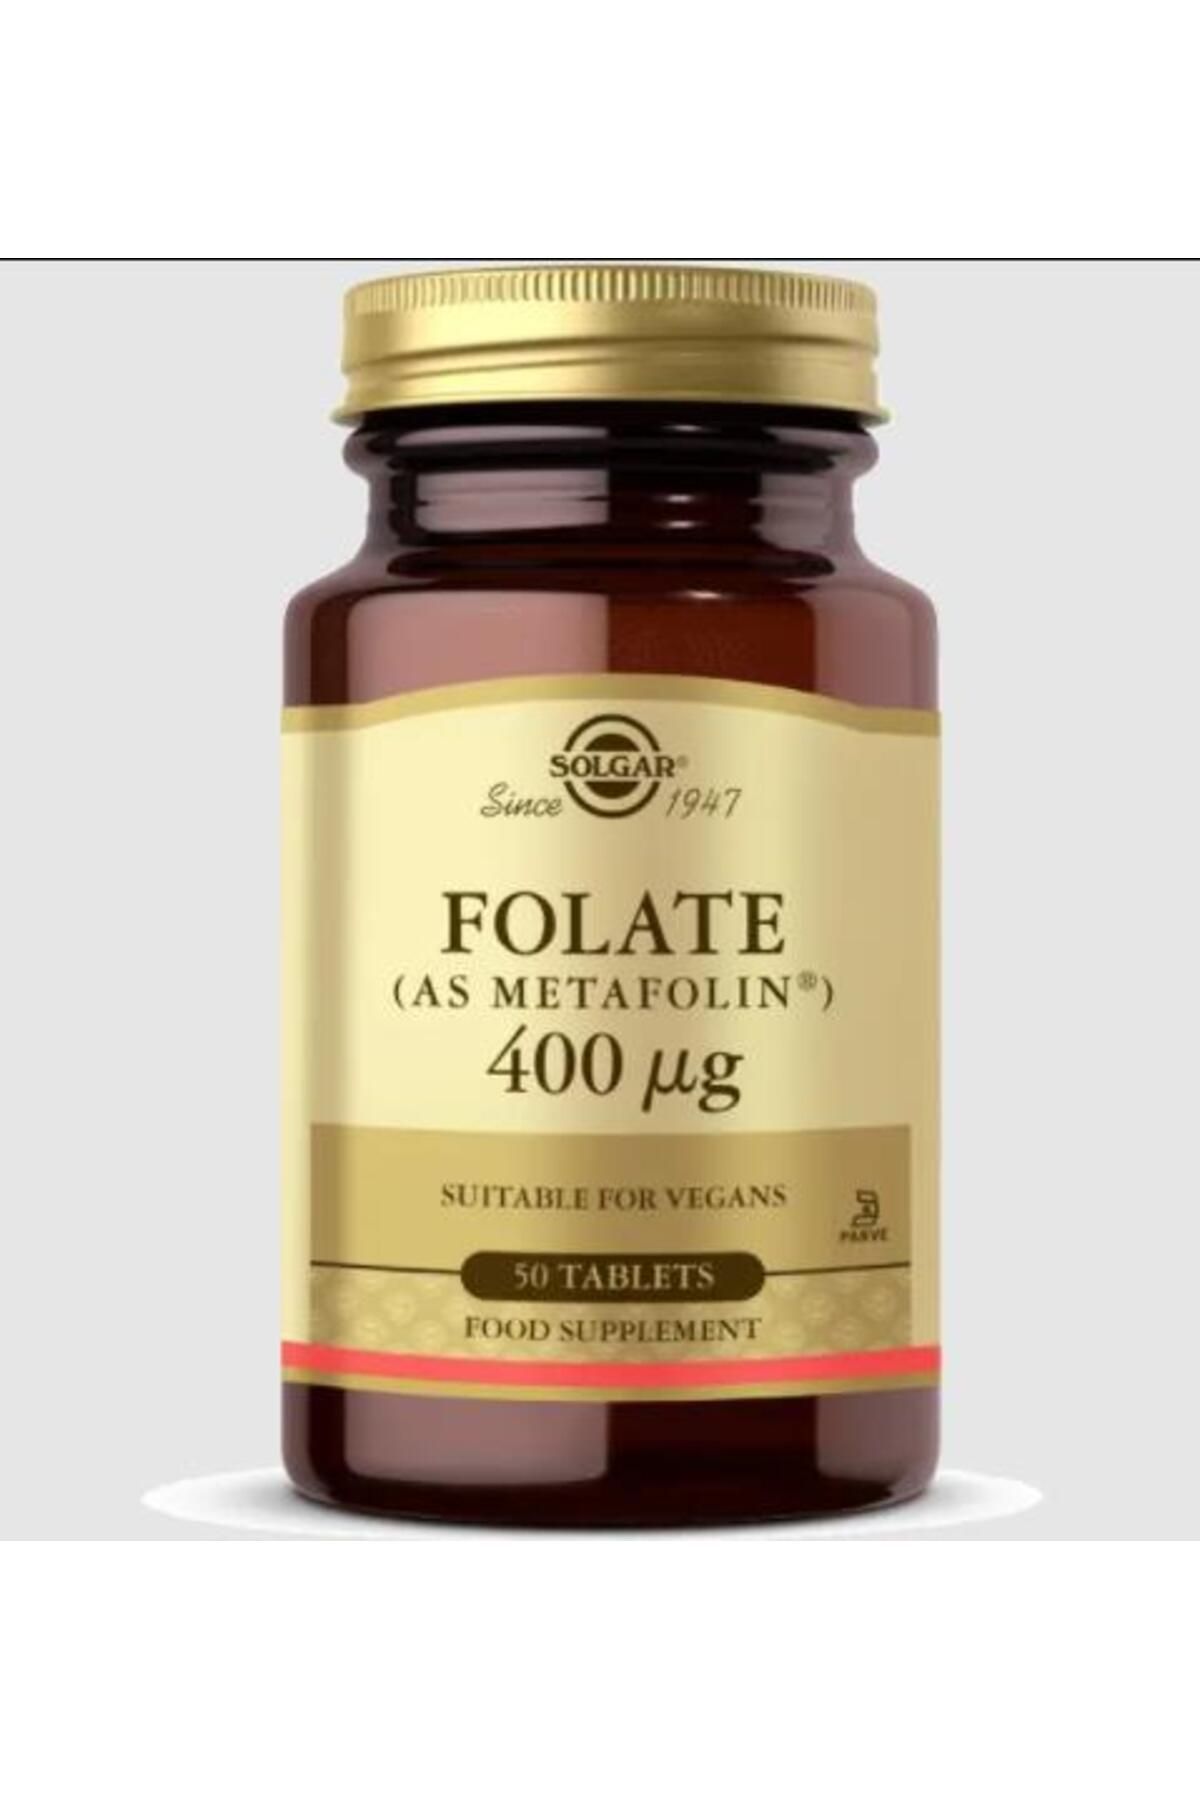 Solgar Folate (Metafolin) 400 Mcg 50 Tablet